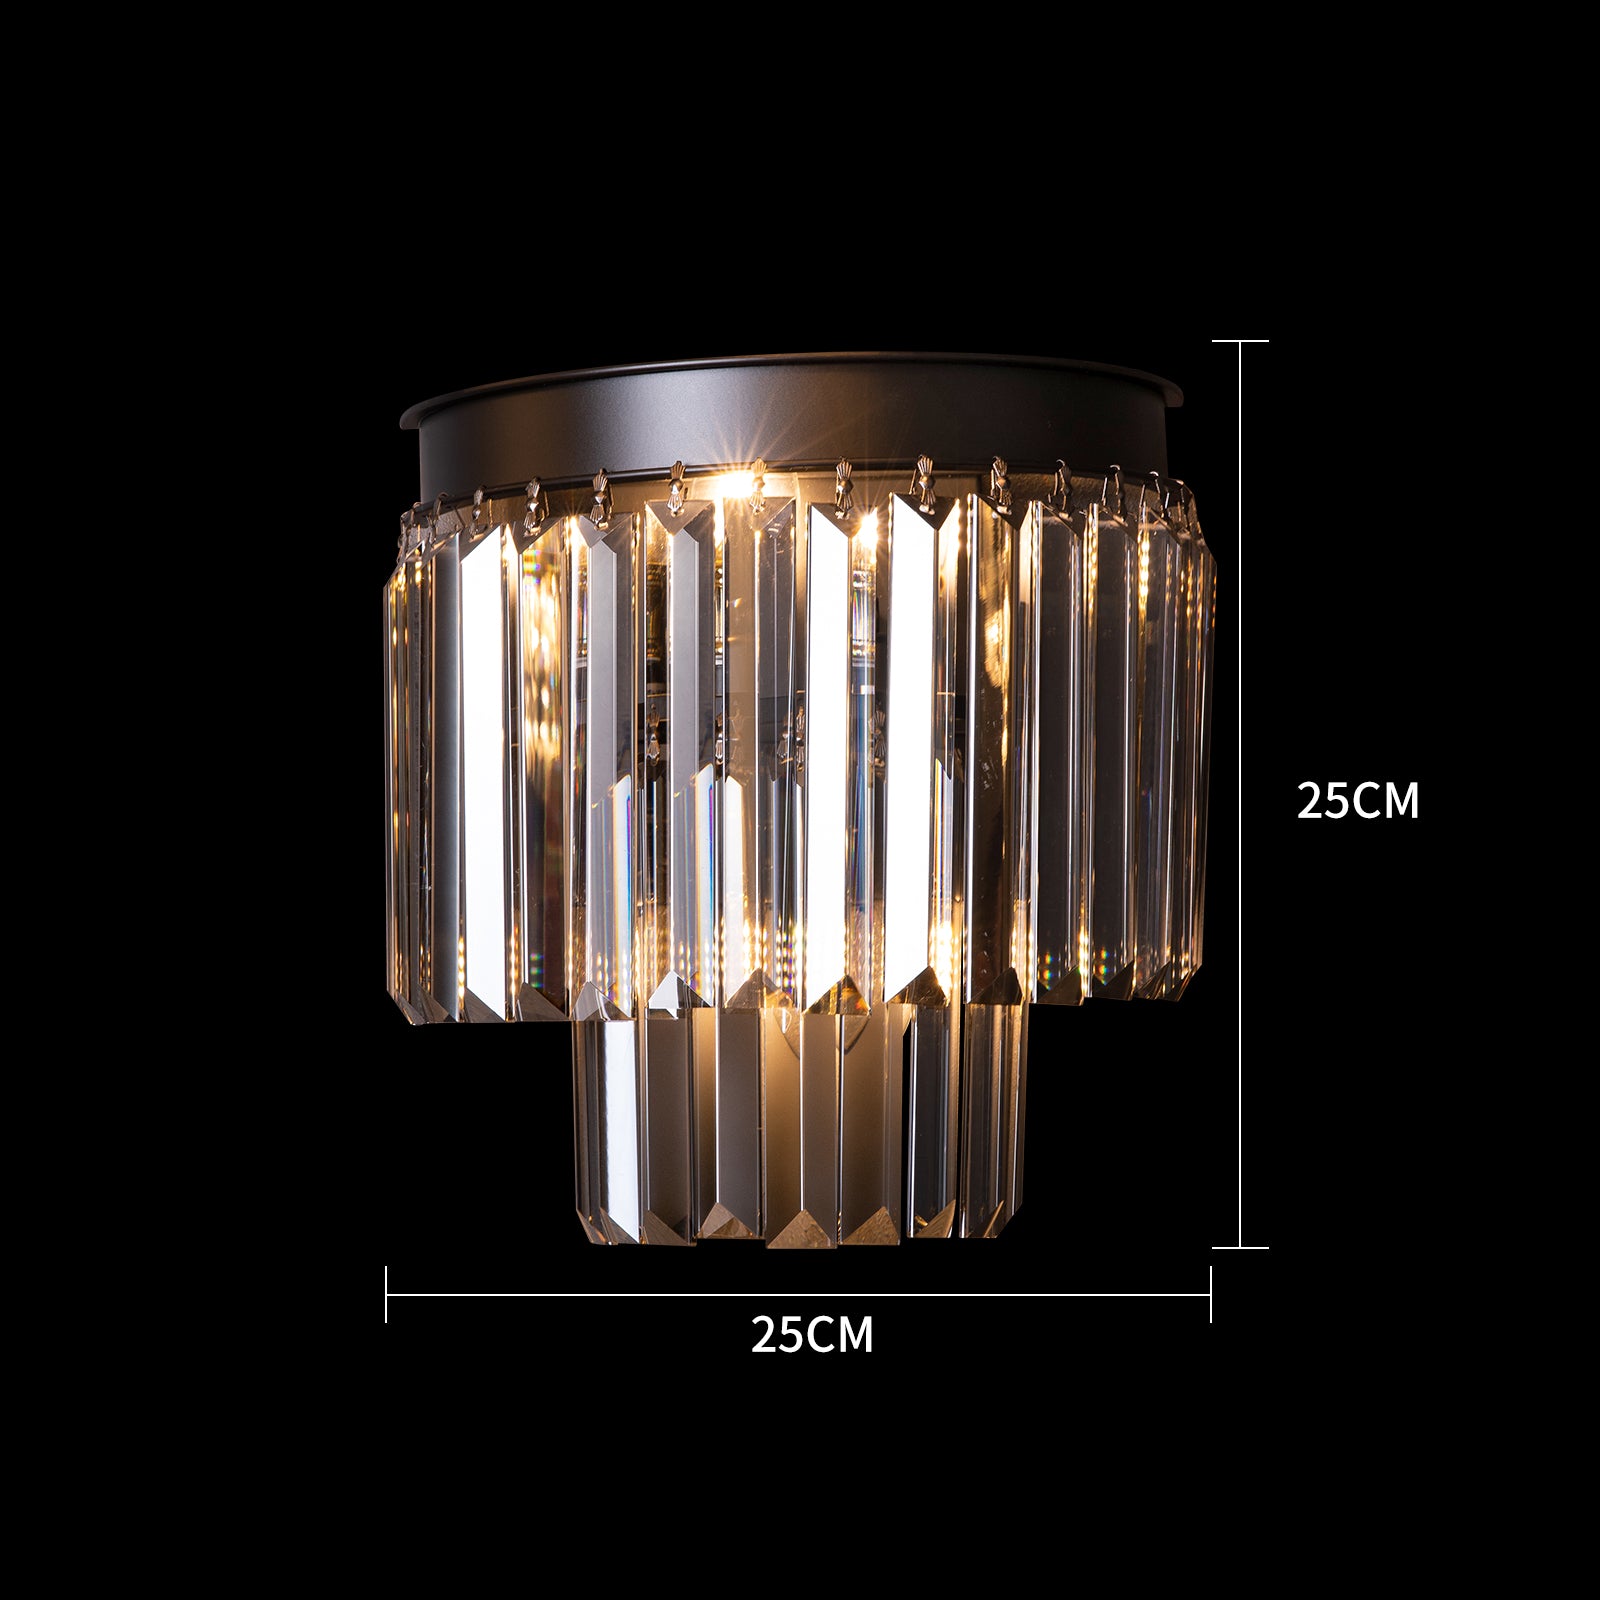 Væglampe  Luxware Polaris  Sort Krans m. mørk krystal 25x25 cm.